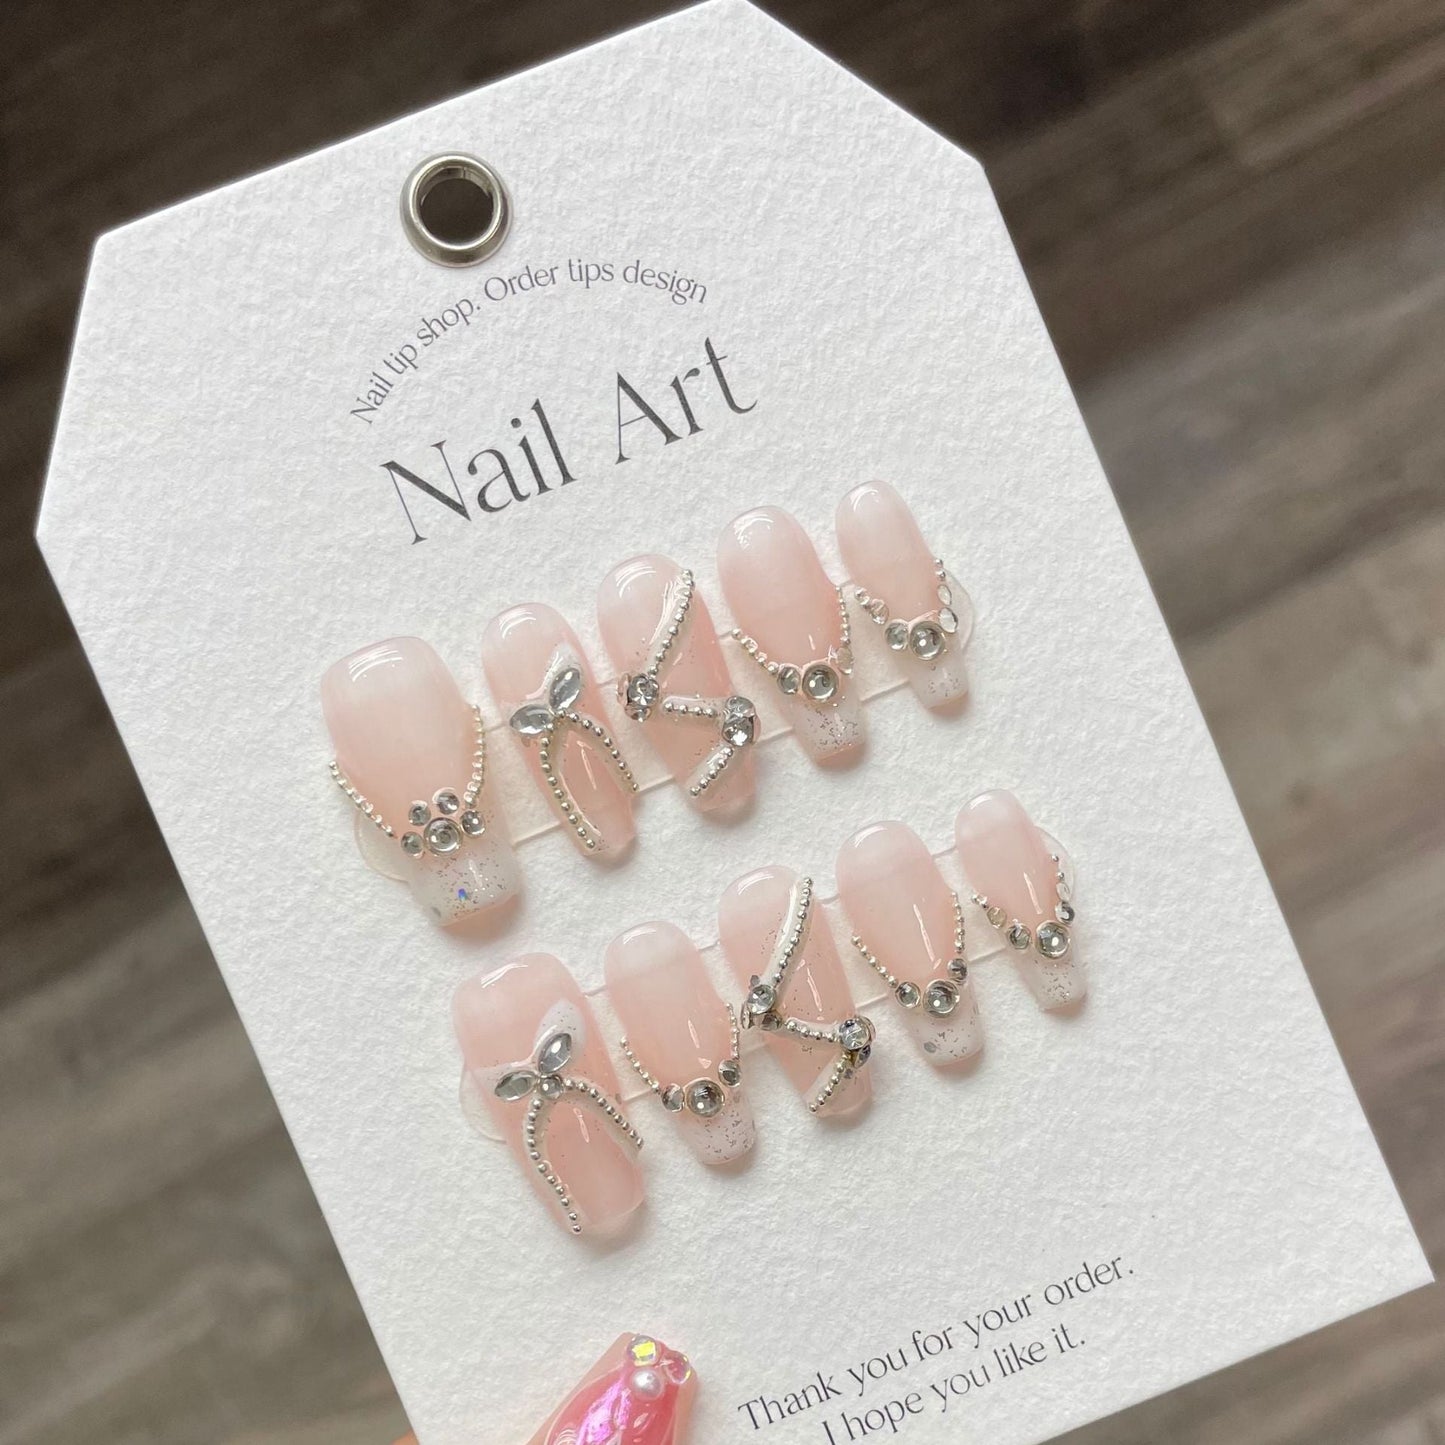 932 French style press on nails 100% handmade false nails pink